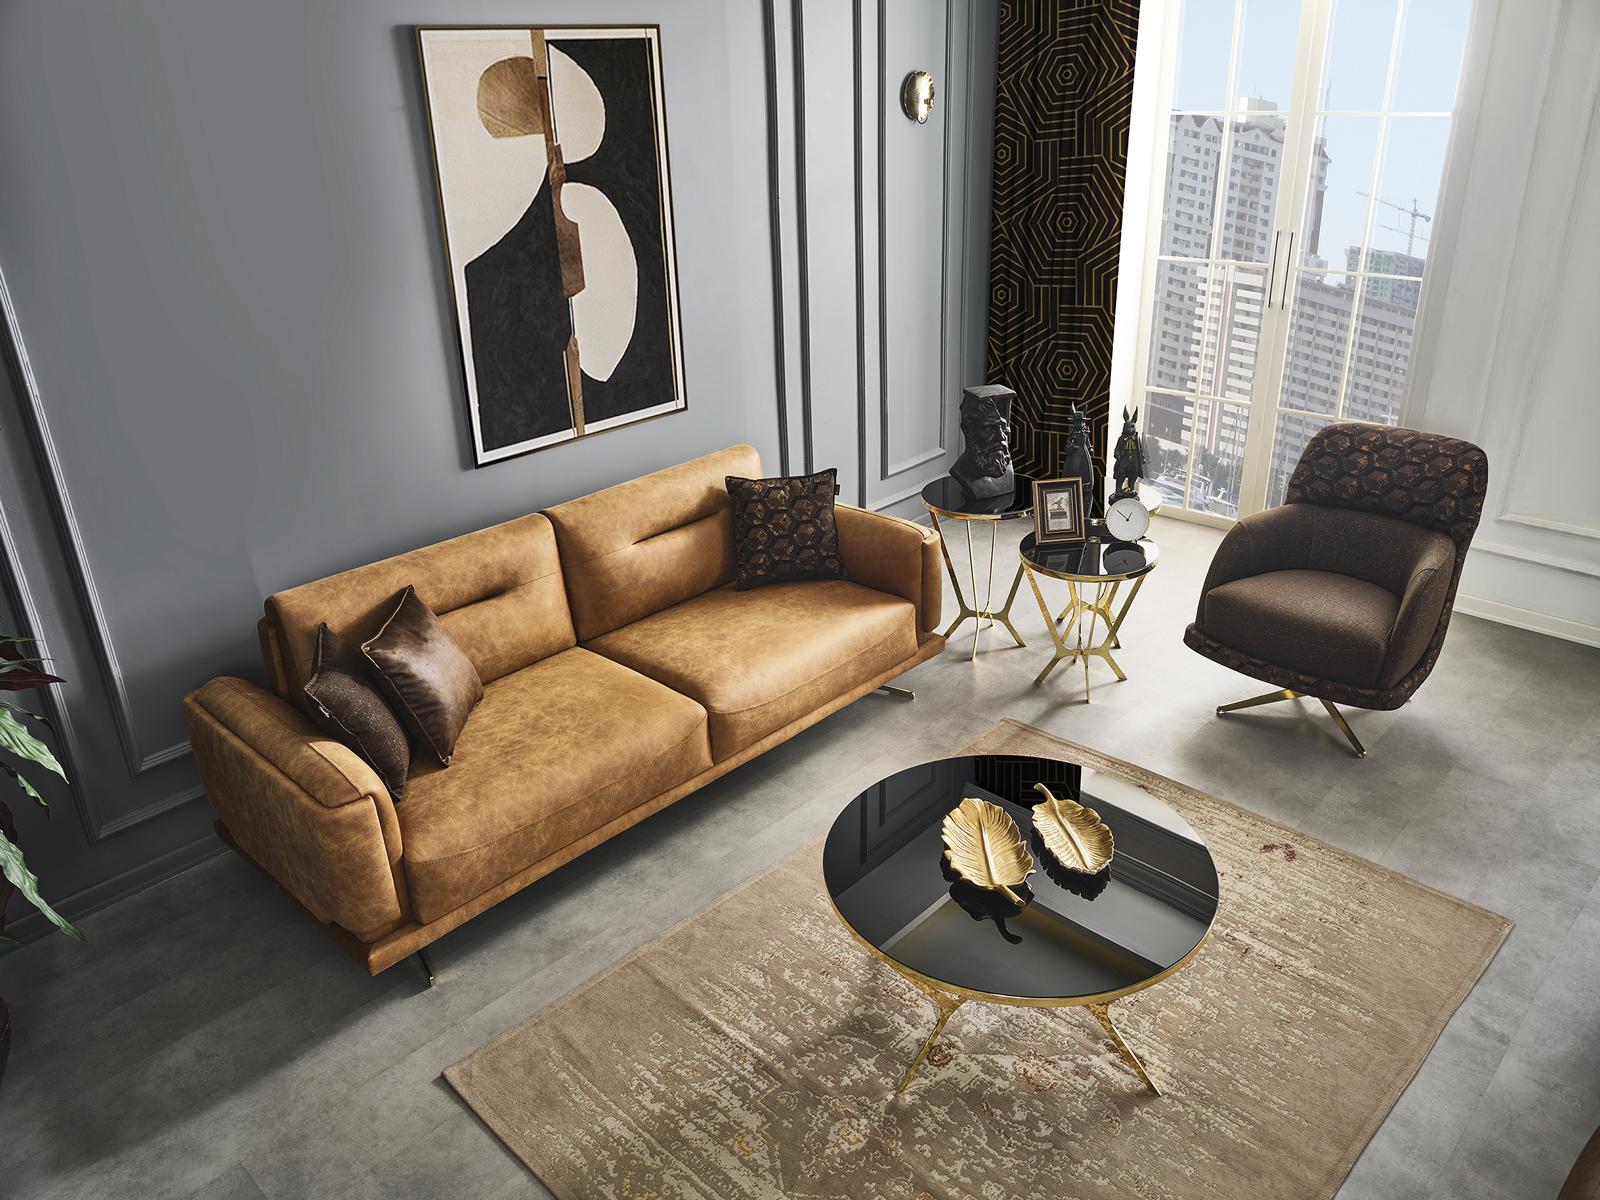 Sofagarnitur Sofa 31 Sitzer Sessel Möbel Luxus Design Neu braun